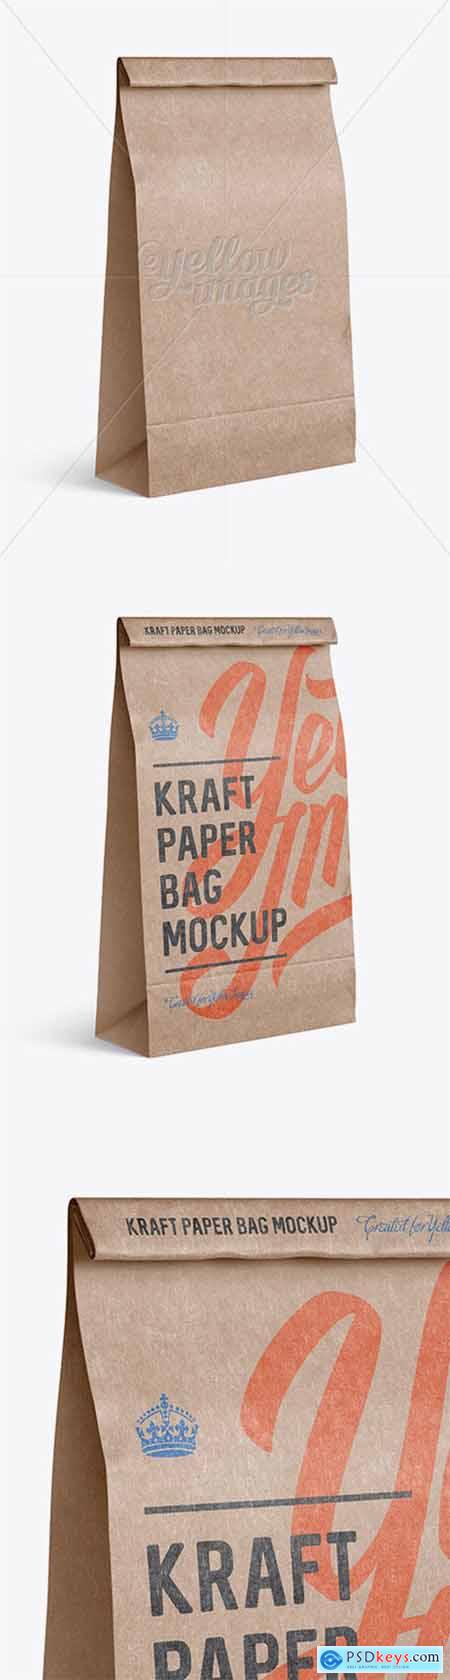 Kraft Paper Food-Snack Bag Mockup - Halfside View 16918